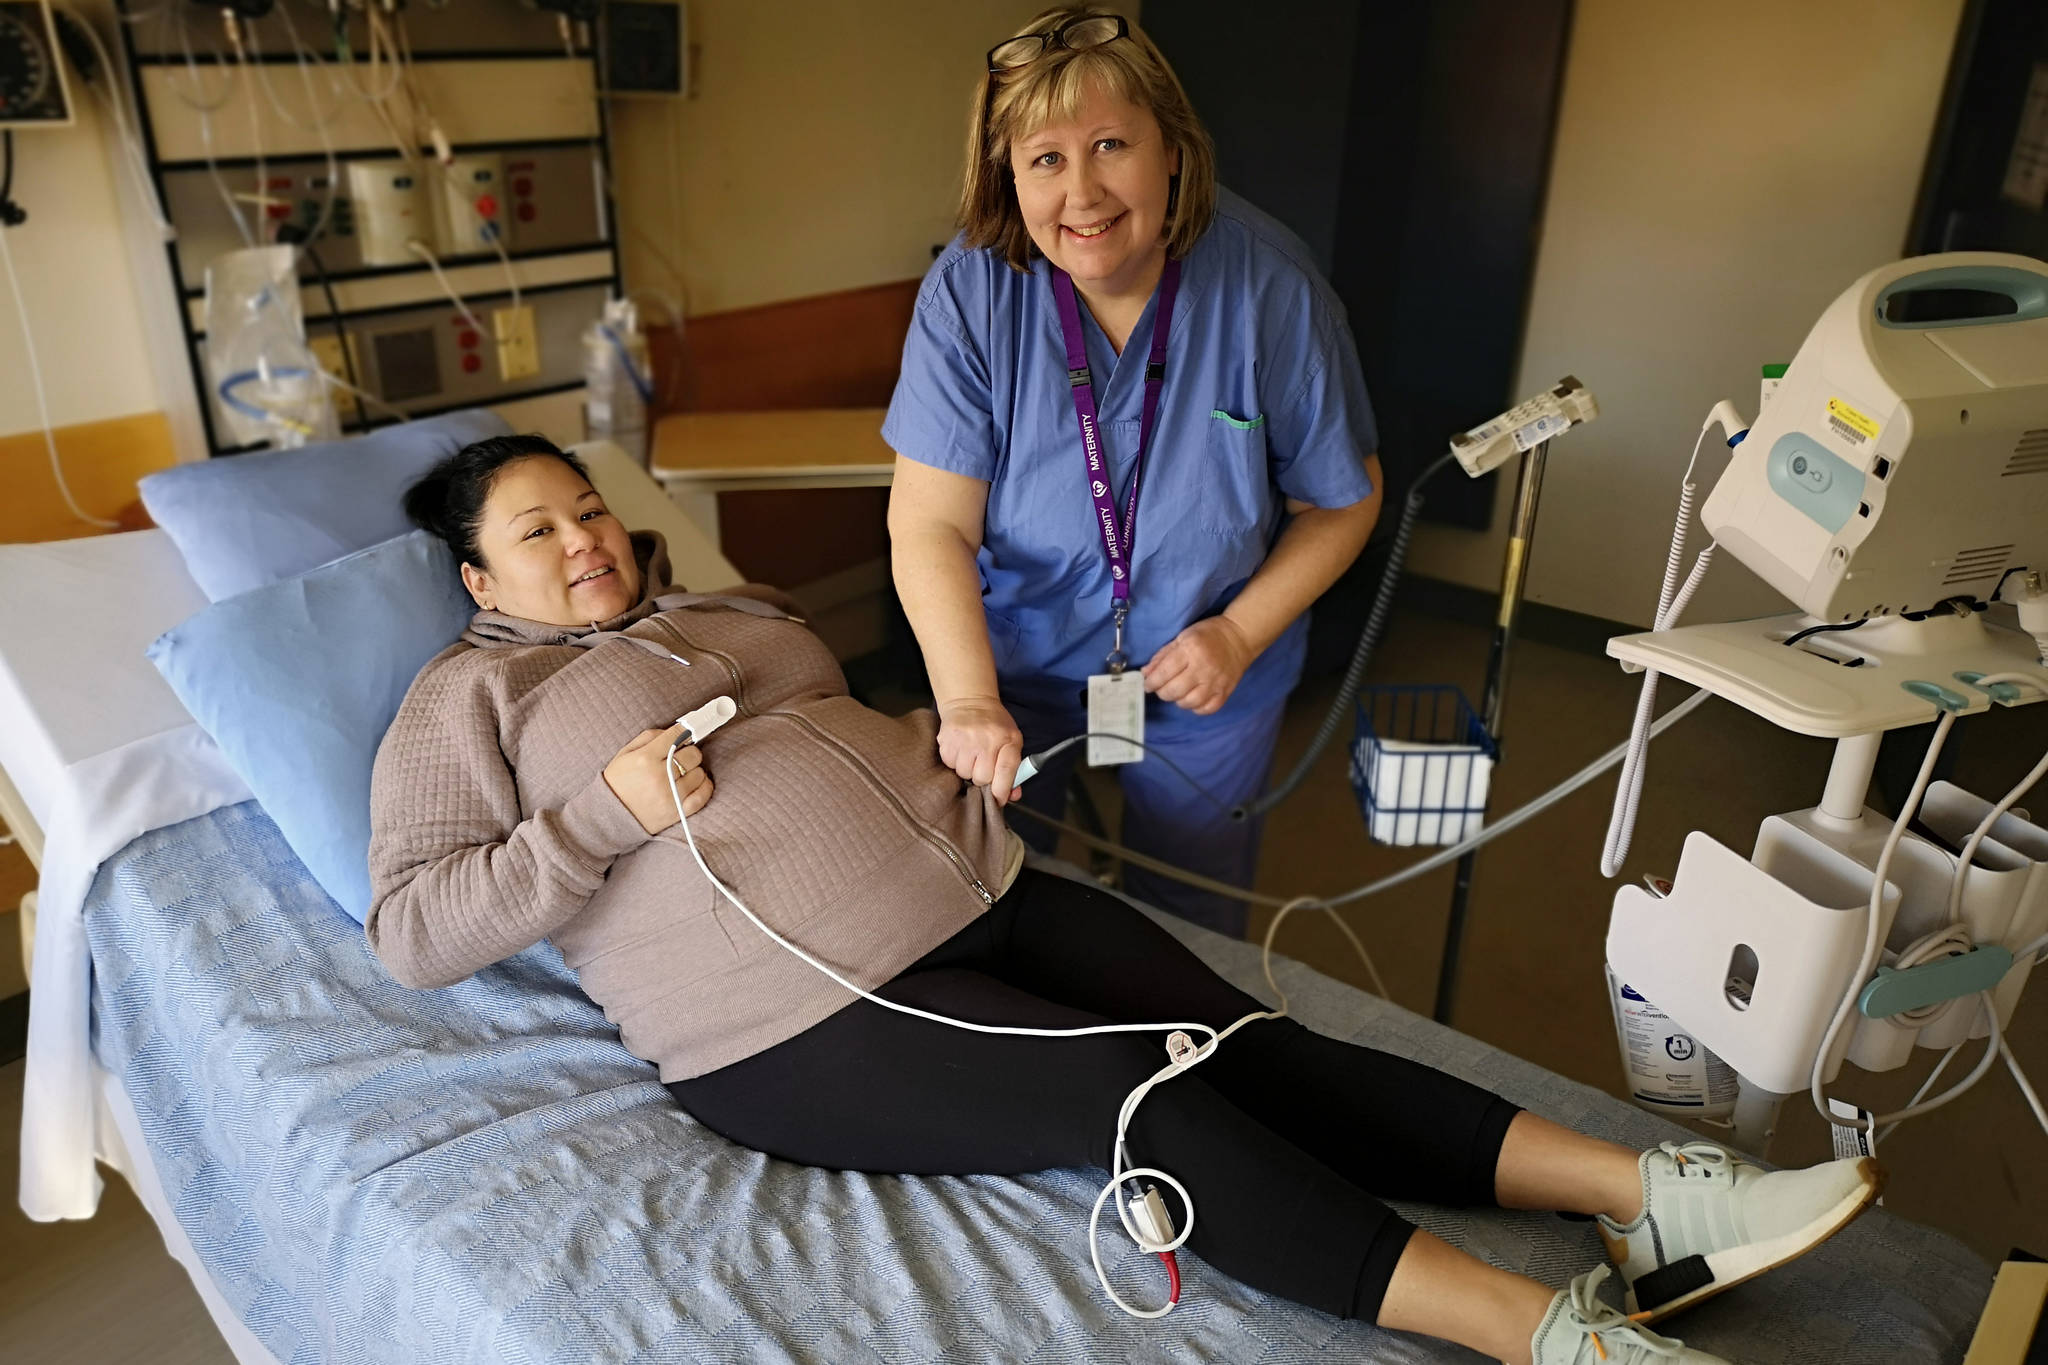 Chilliwack maternity ward gets bundle of new equipment - Hope Standard